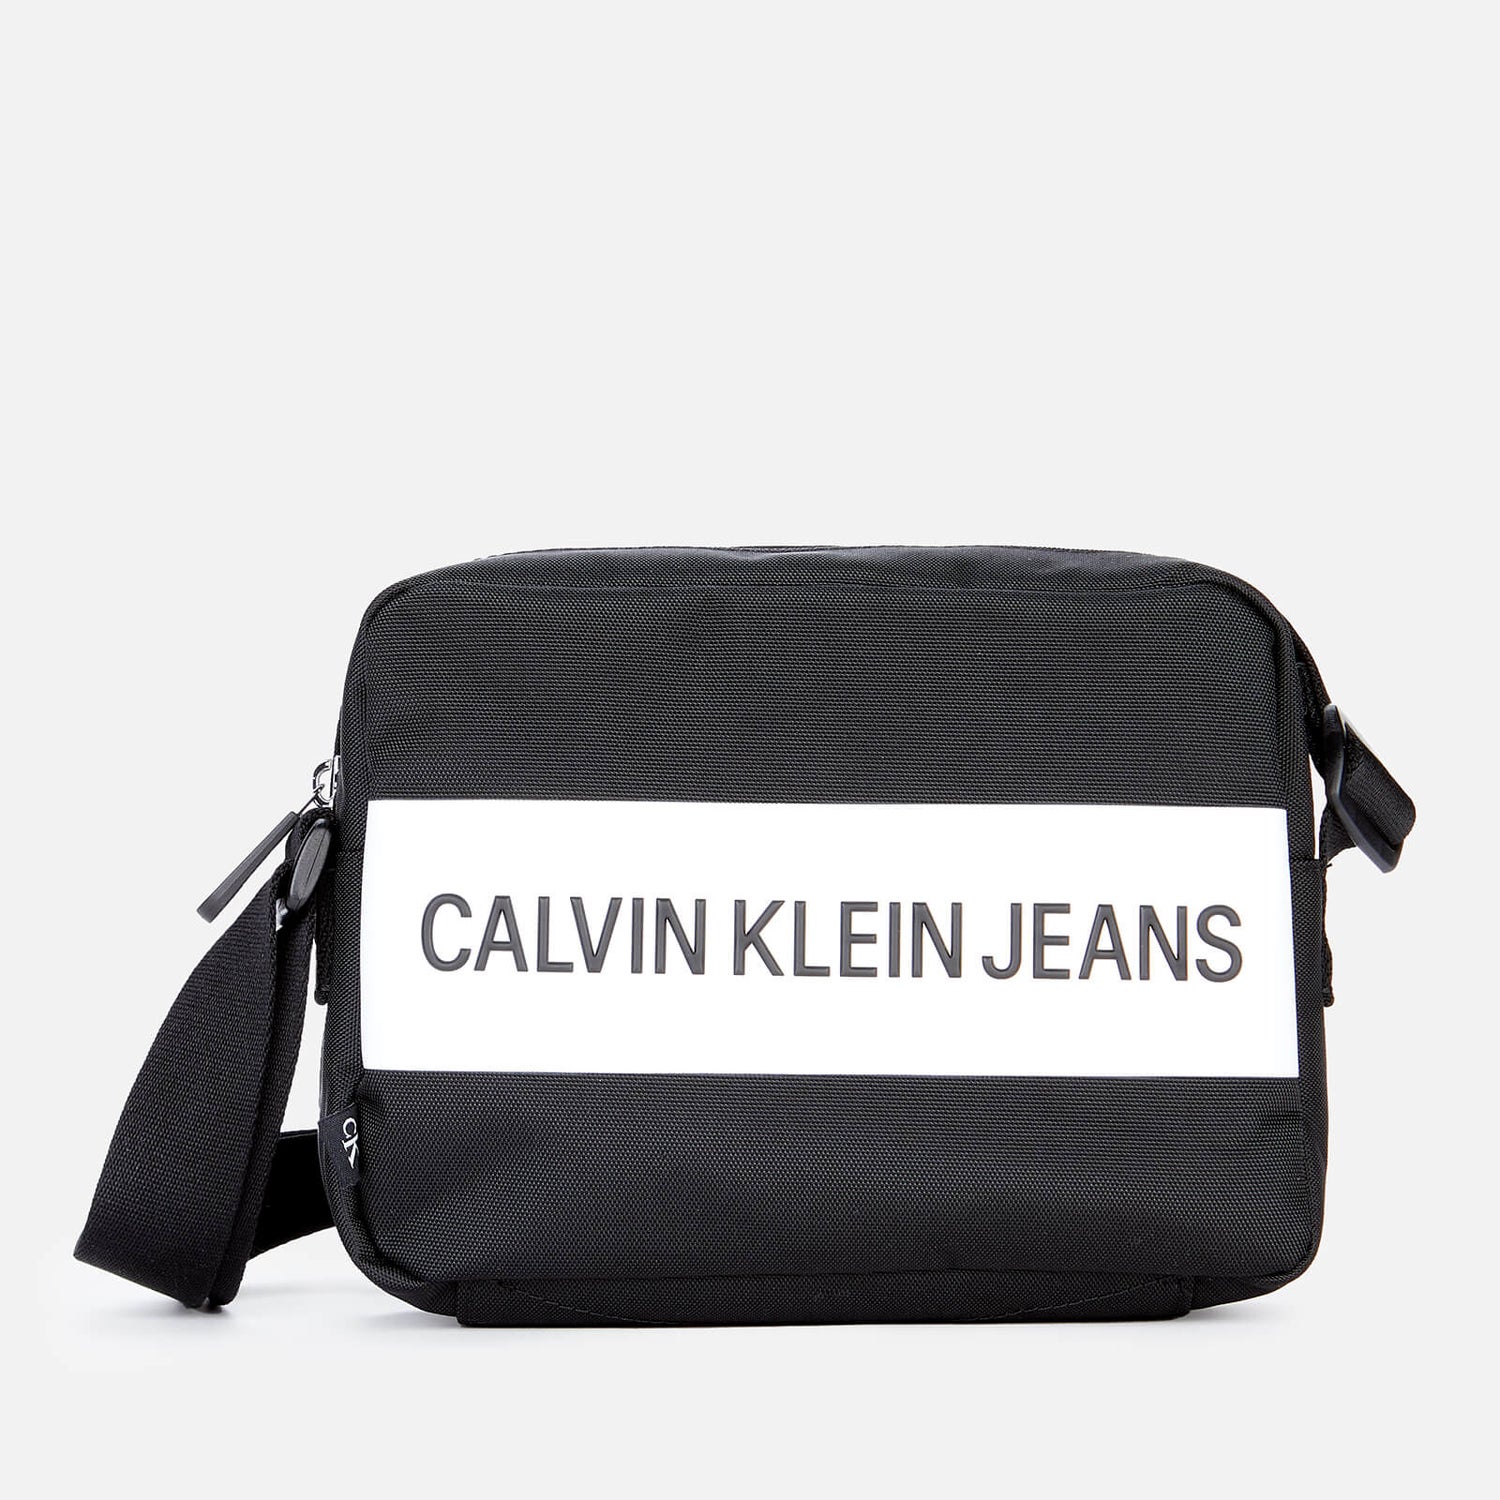 Calvin Klein Jeans 女士相机包 - 黑色